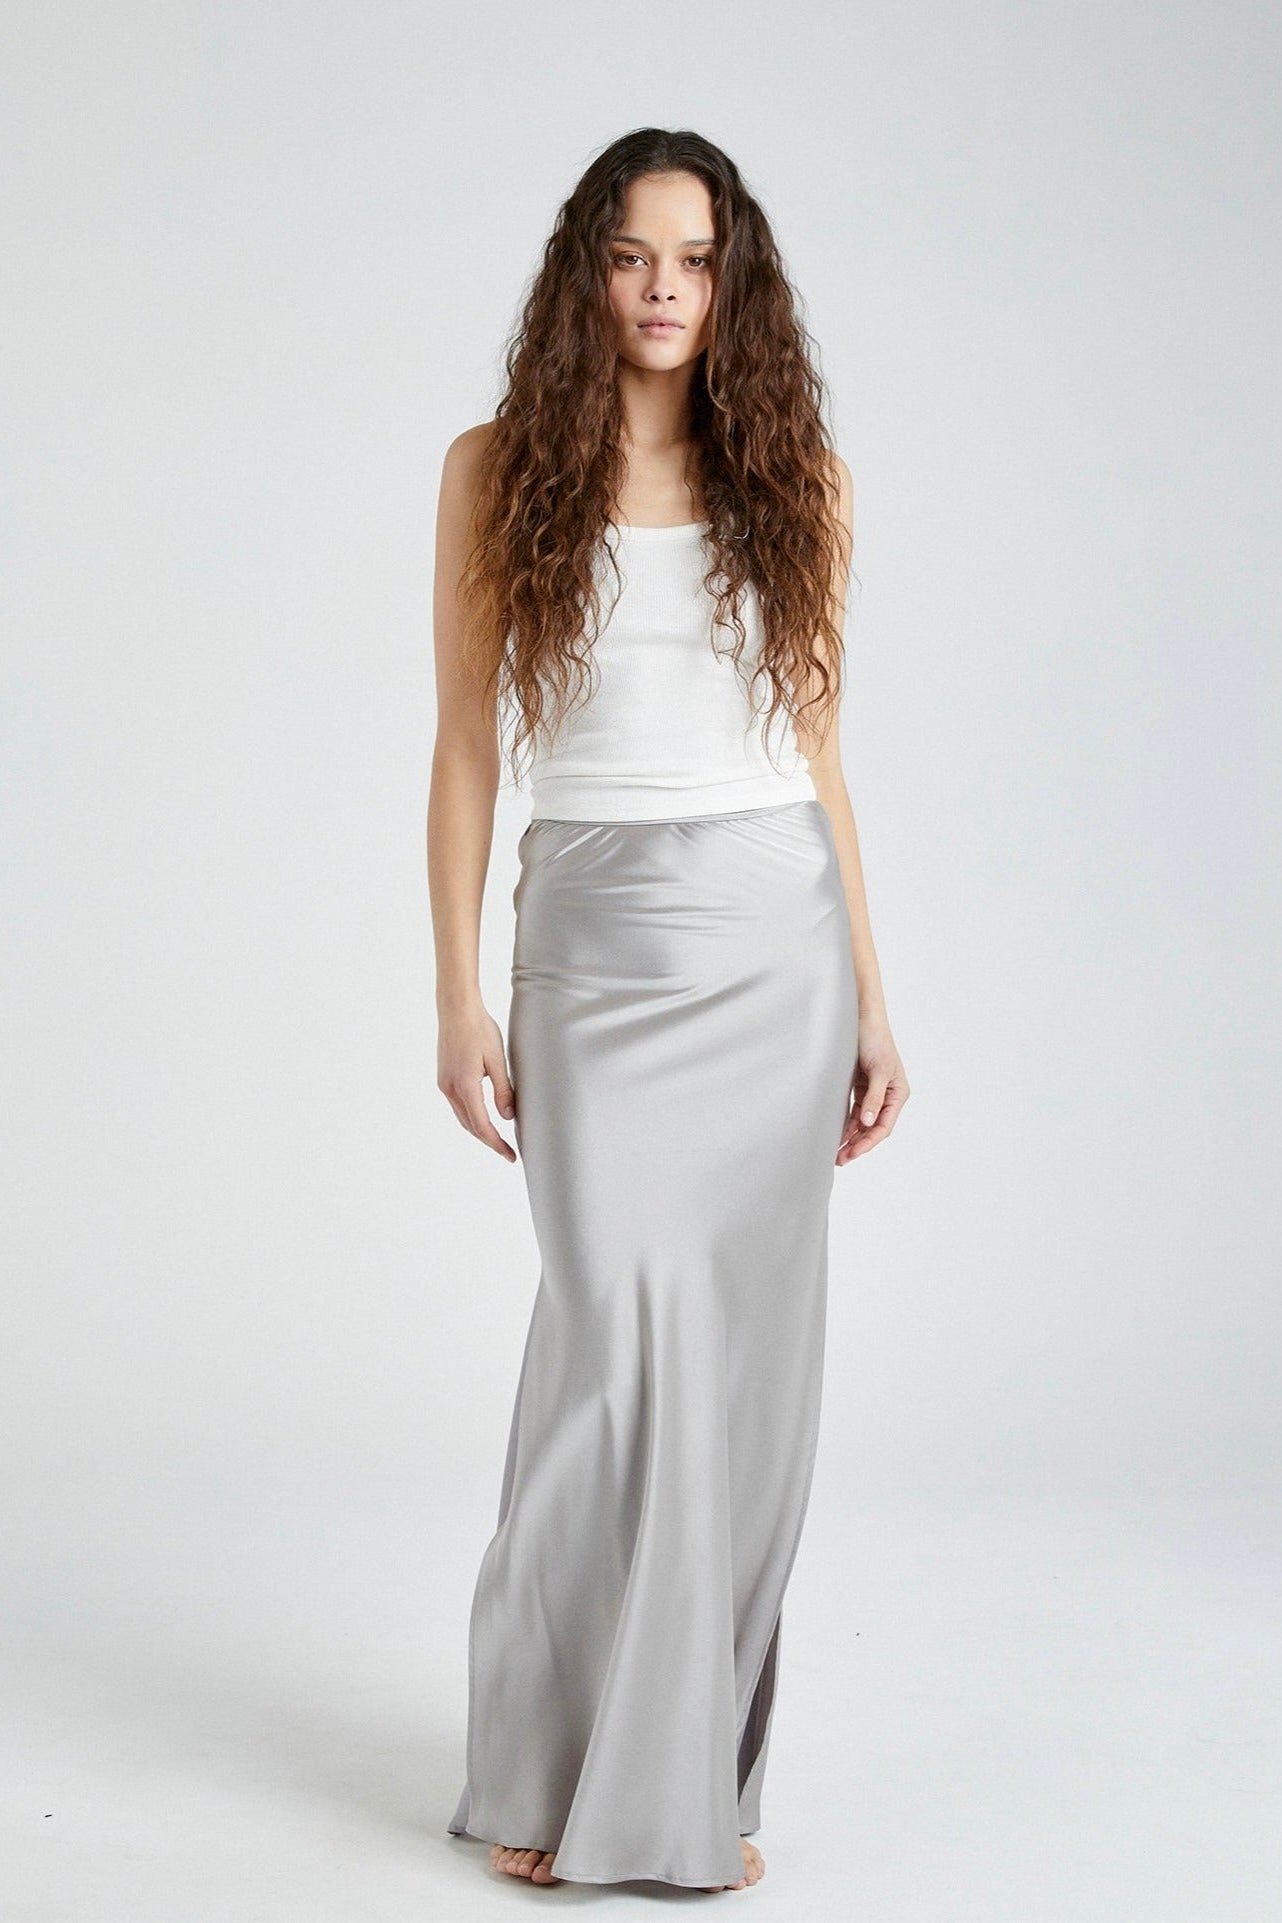 +Beryll Silk Skirt Helena | Silver - +Beryll Silk Skirt | Helena | Silver - +Beryll Worn By Good People